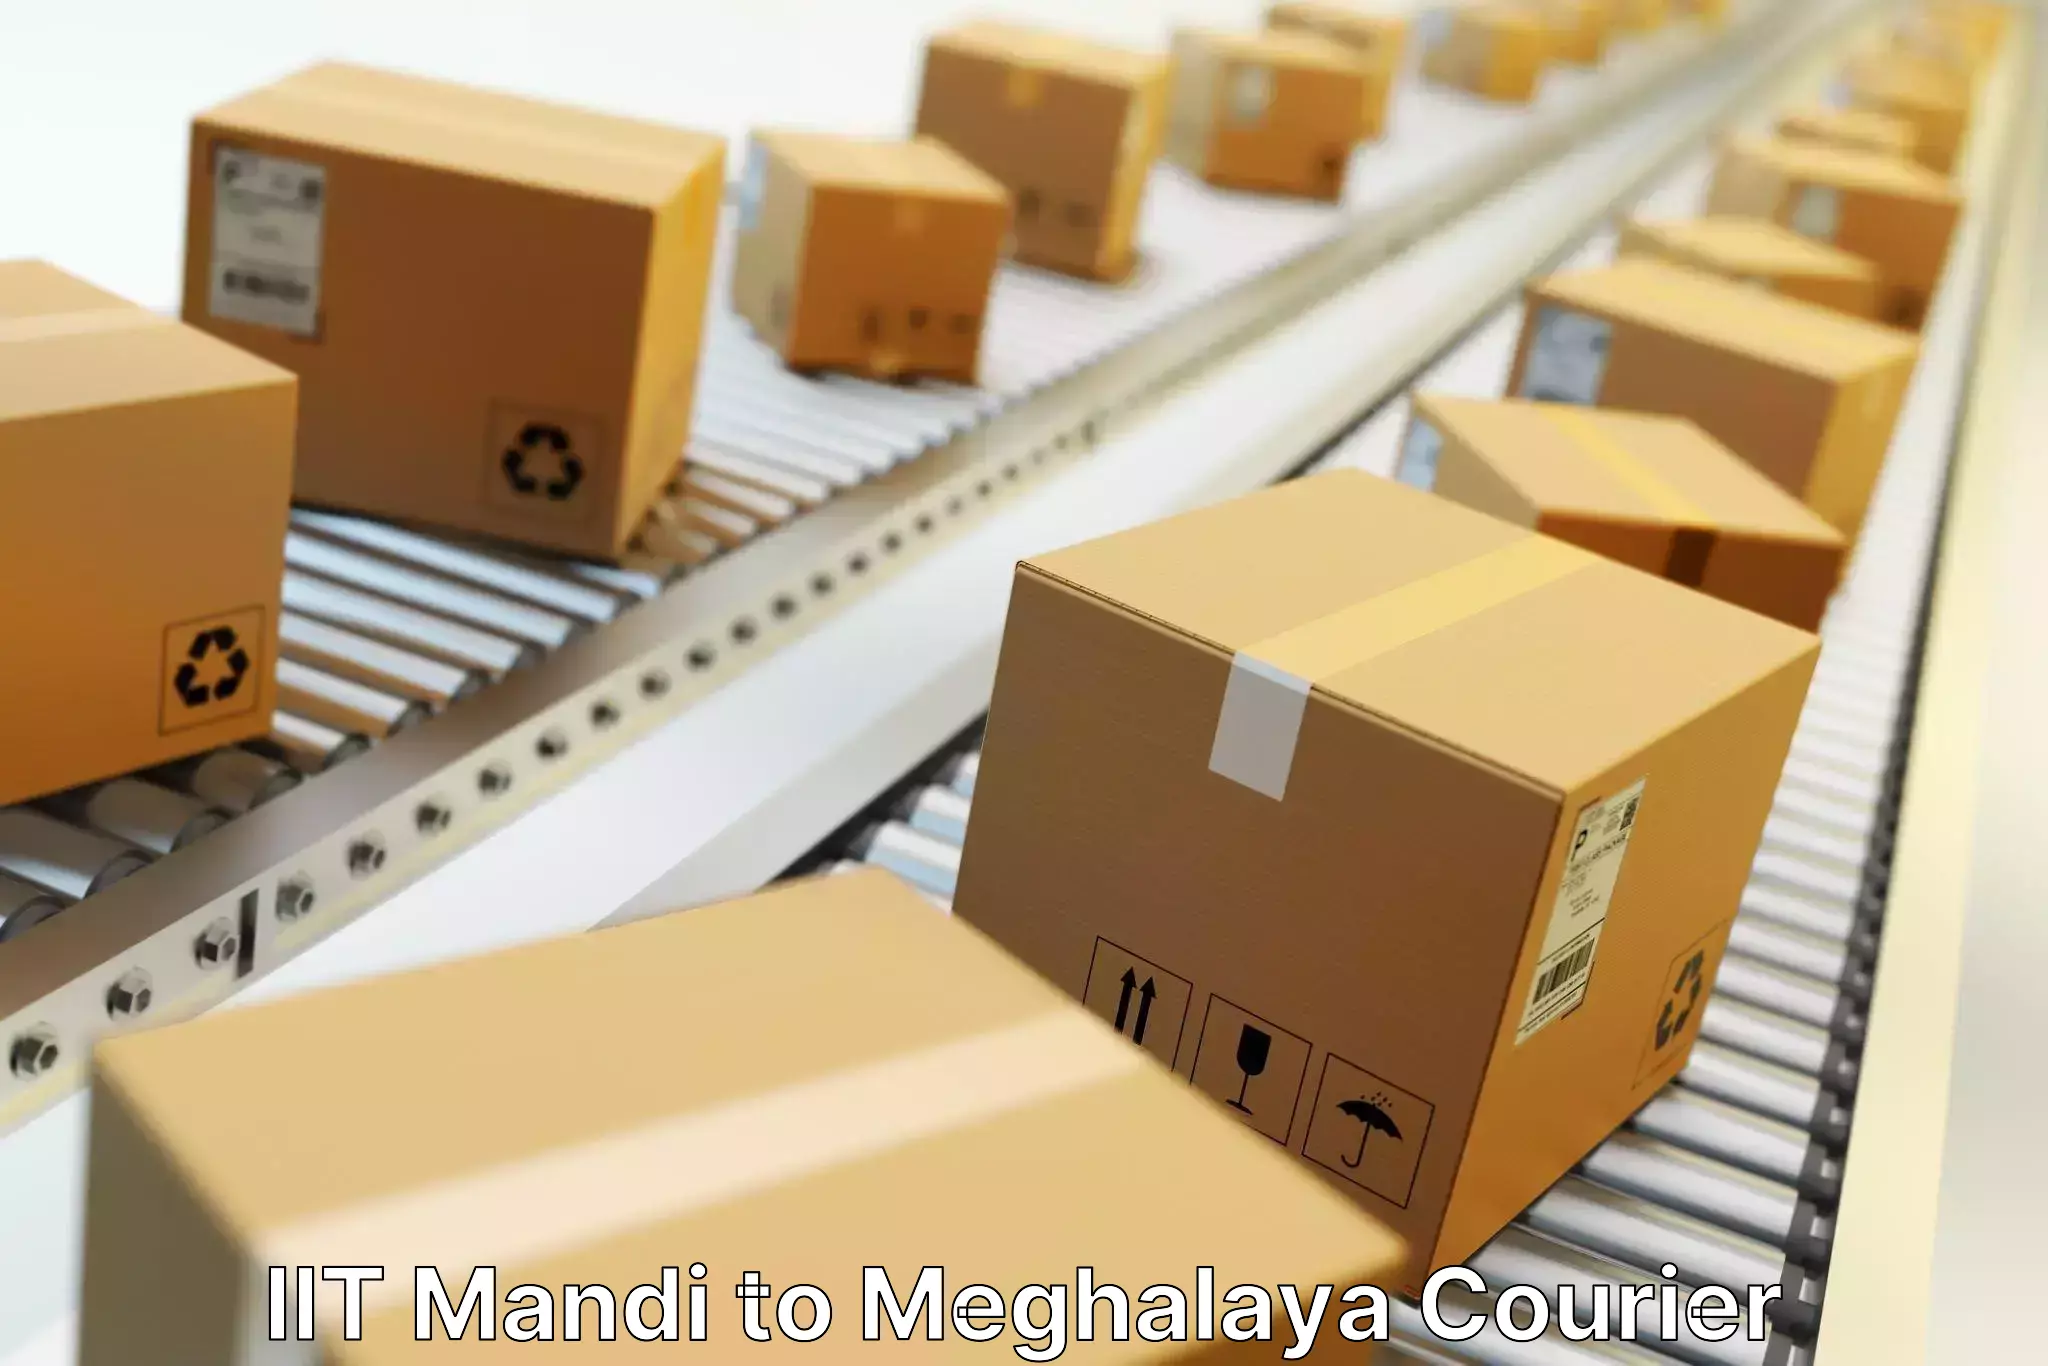 Easy return solutions IIT Mandi to Meghalaya